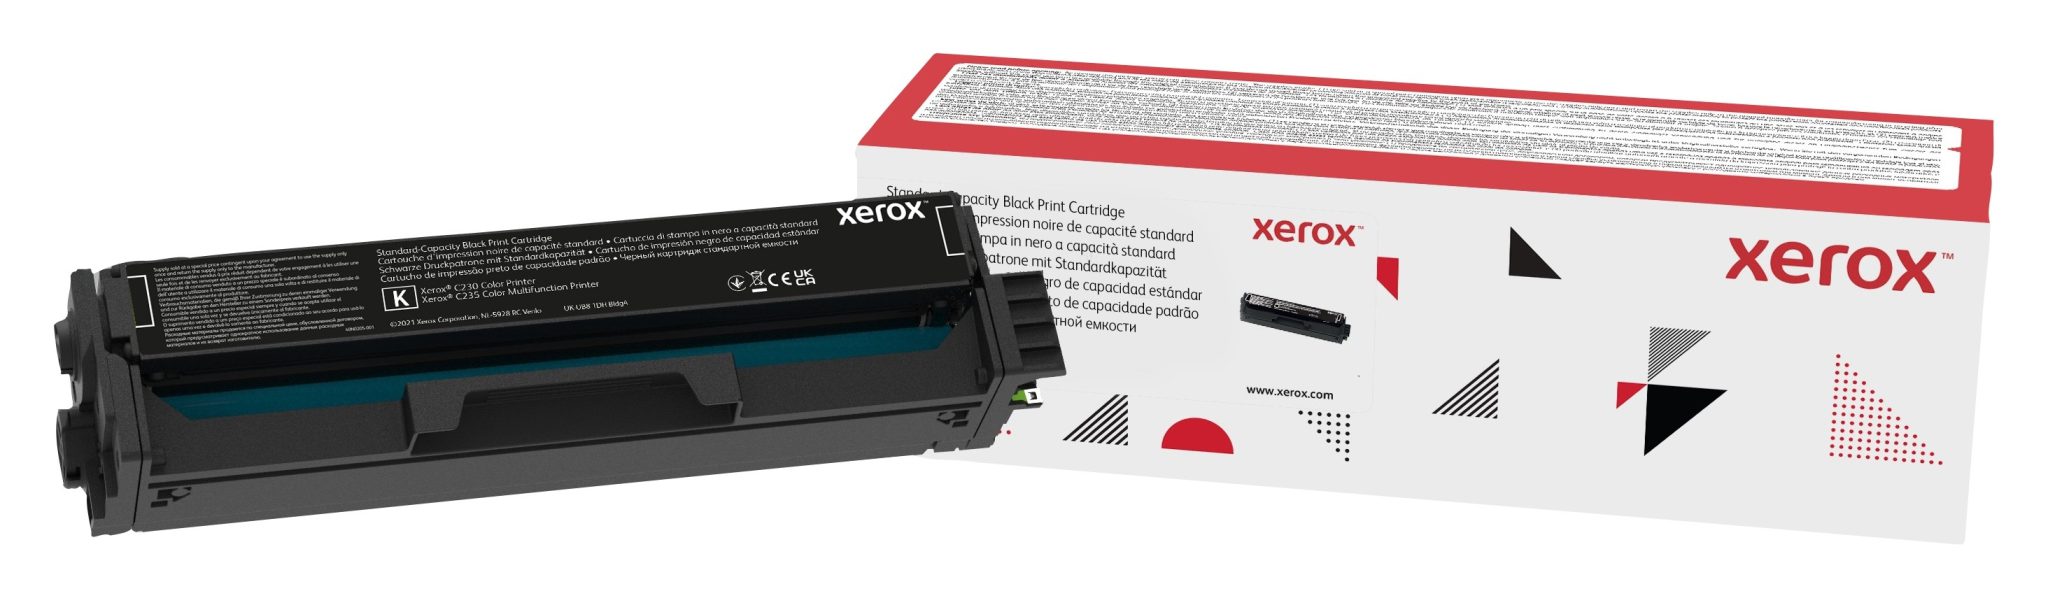 XEROX C230/C235 Black Standard Capacity Toner Cartridge 1500 pages